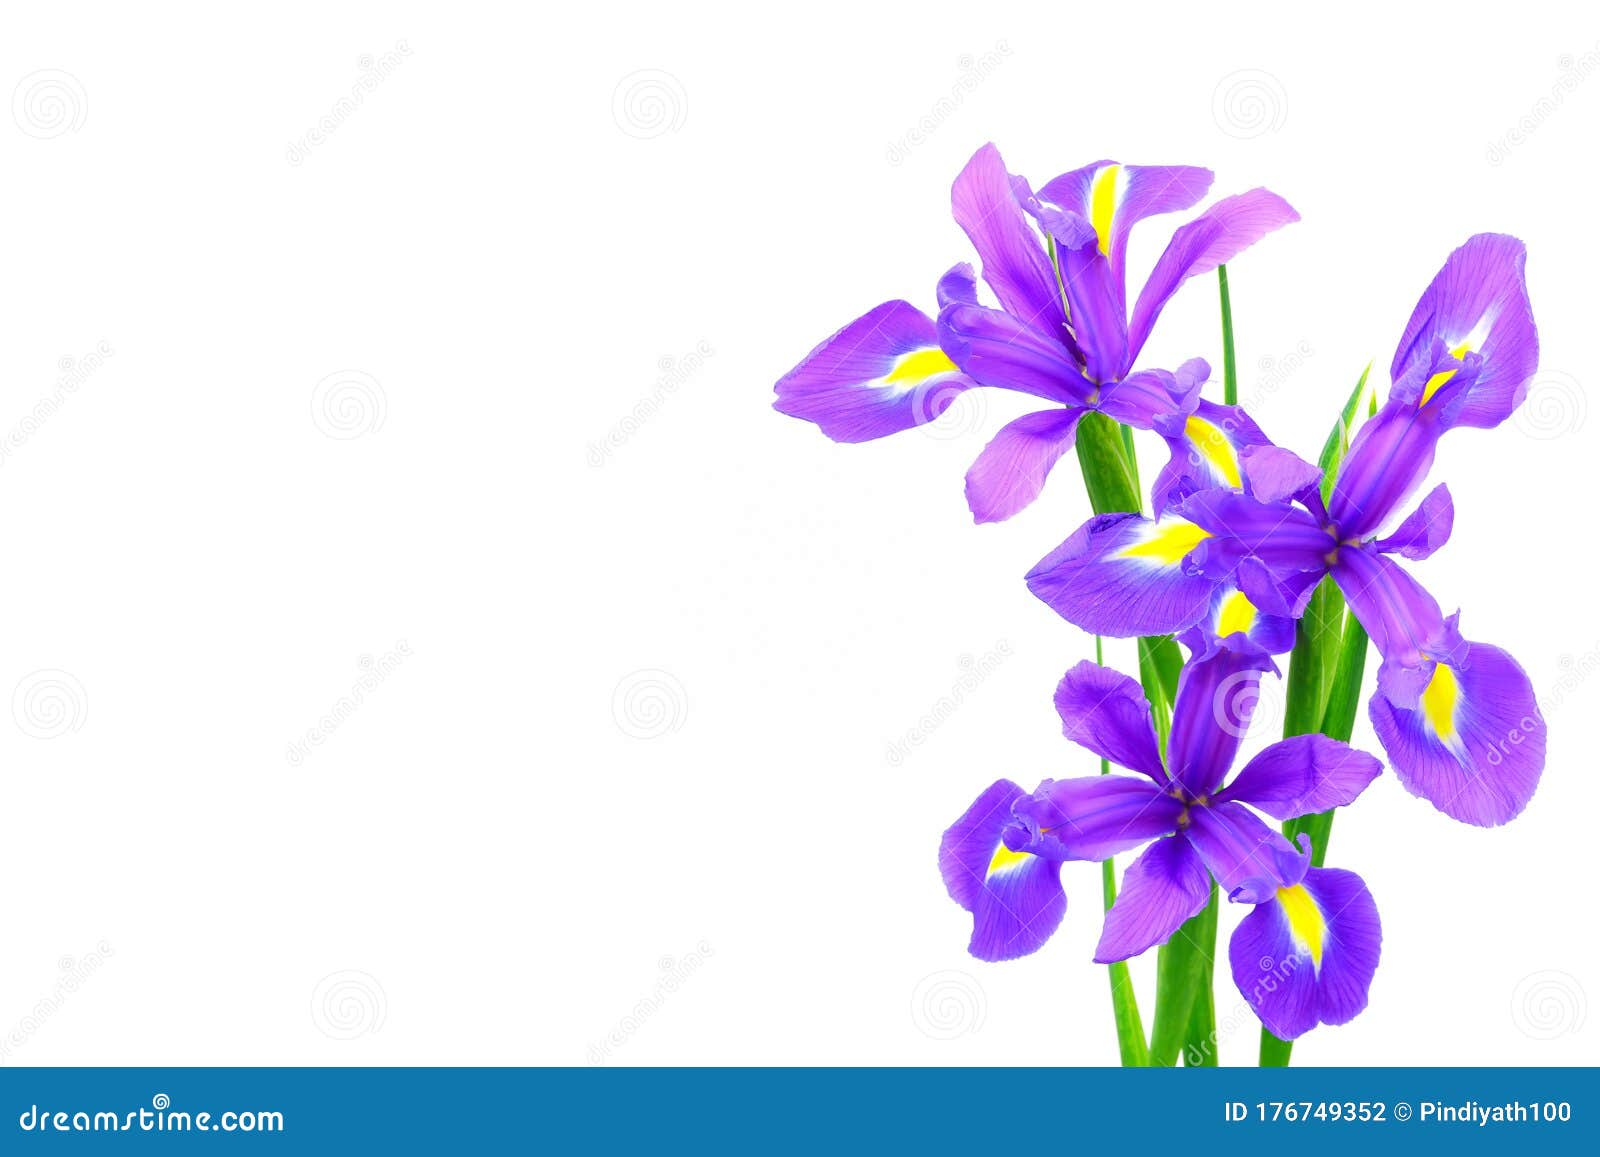 Three Beautiful Purple Iris Flowers on White Background Stock ...